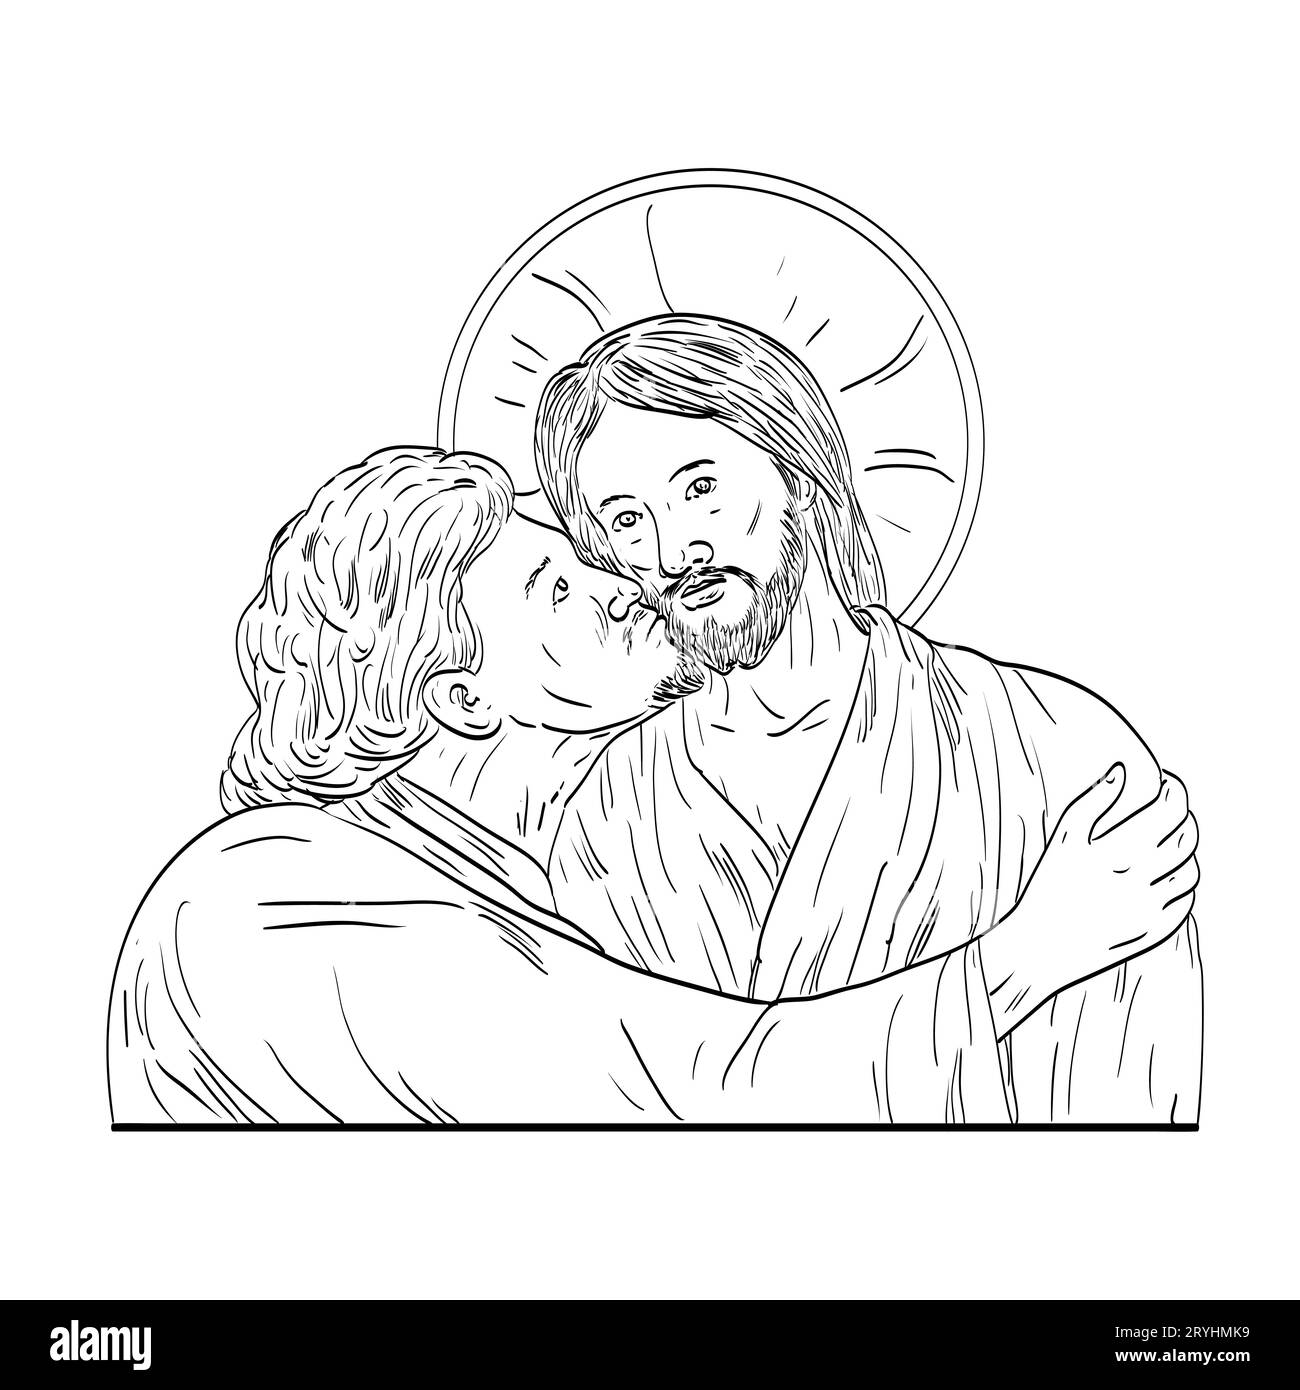 Judas Iscariot Betrayal of Jesus Medieval Style Line Art Drawing Stock Photo